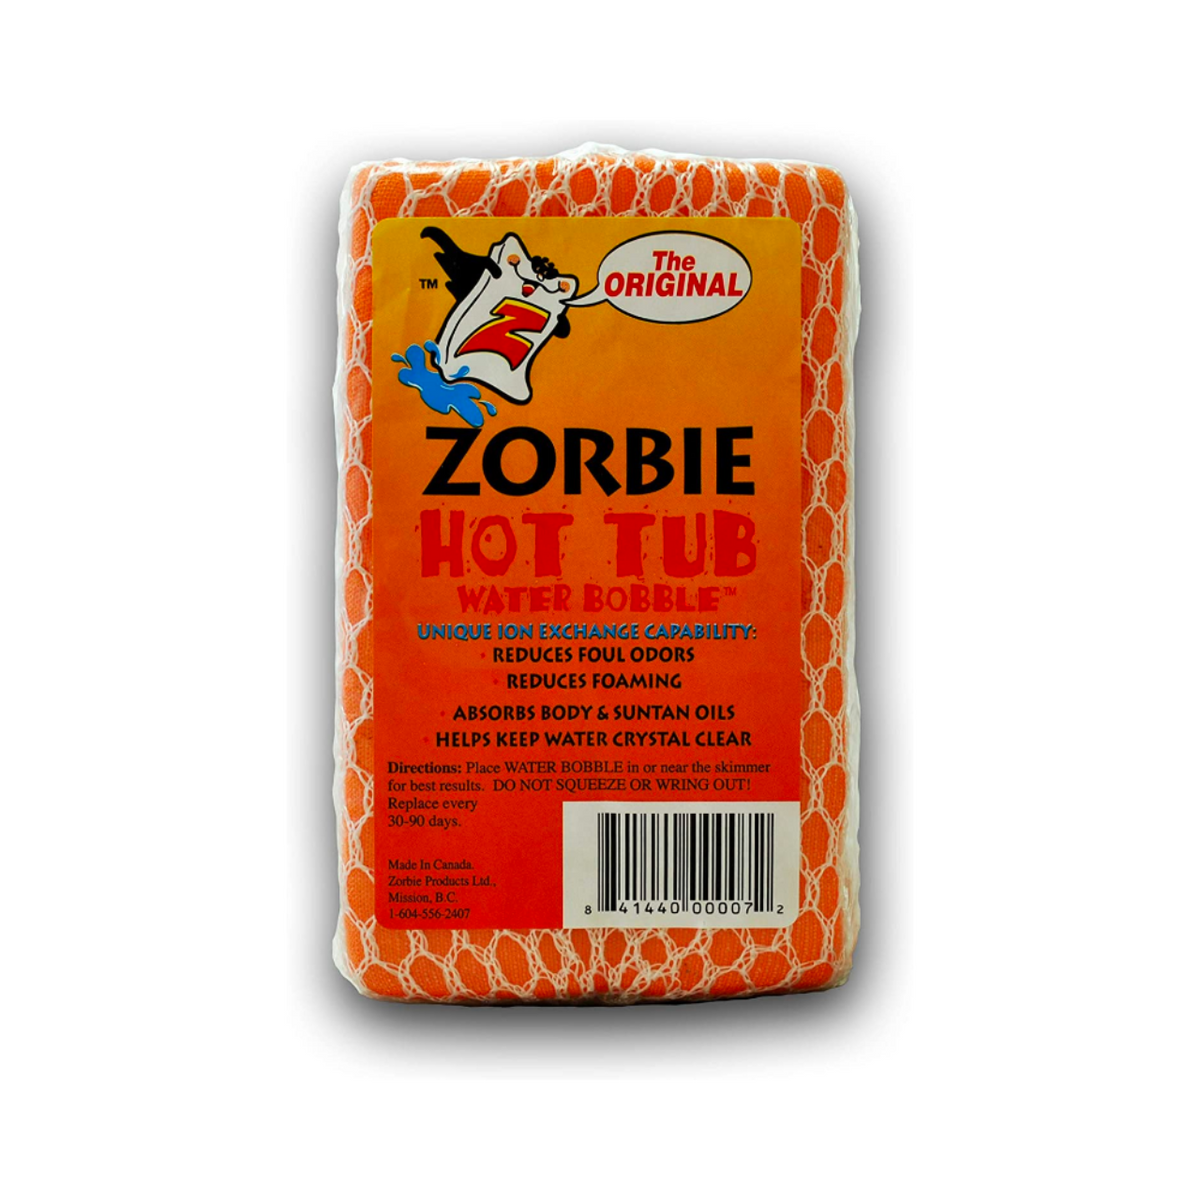 Zorbie Hot Tub Water Bobble - Removes Hot Tub Contaminants